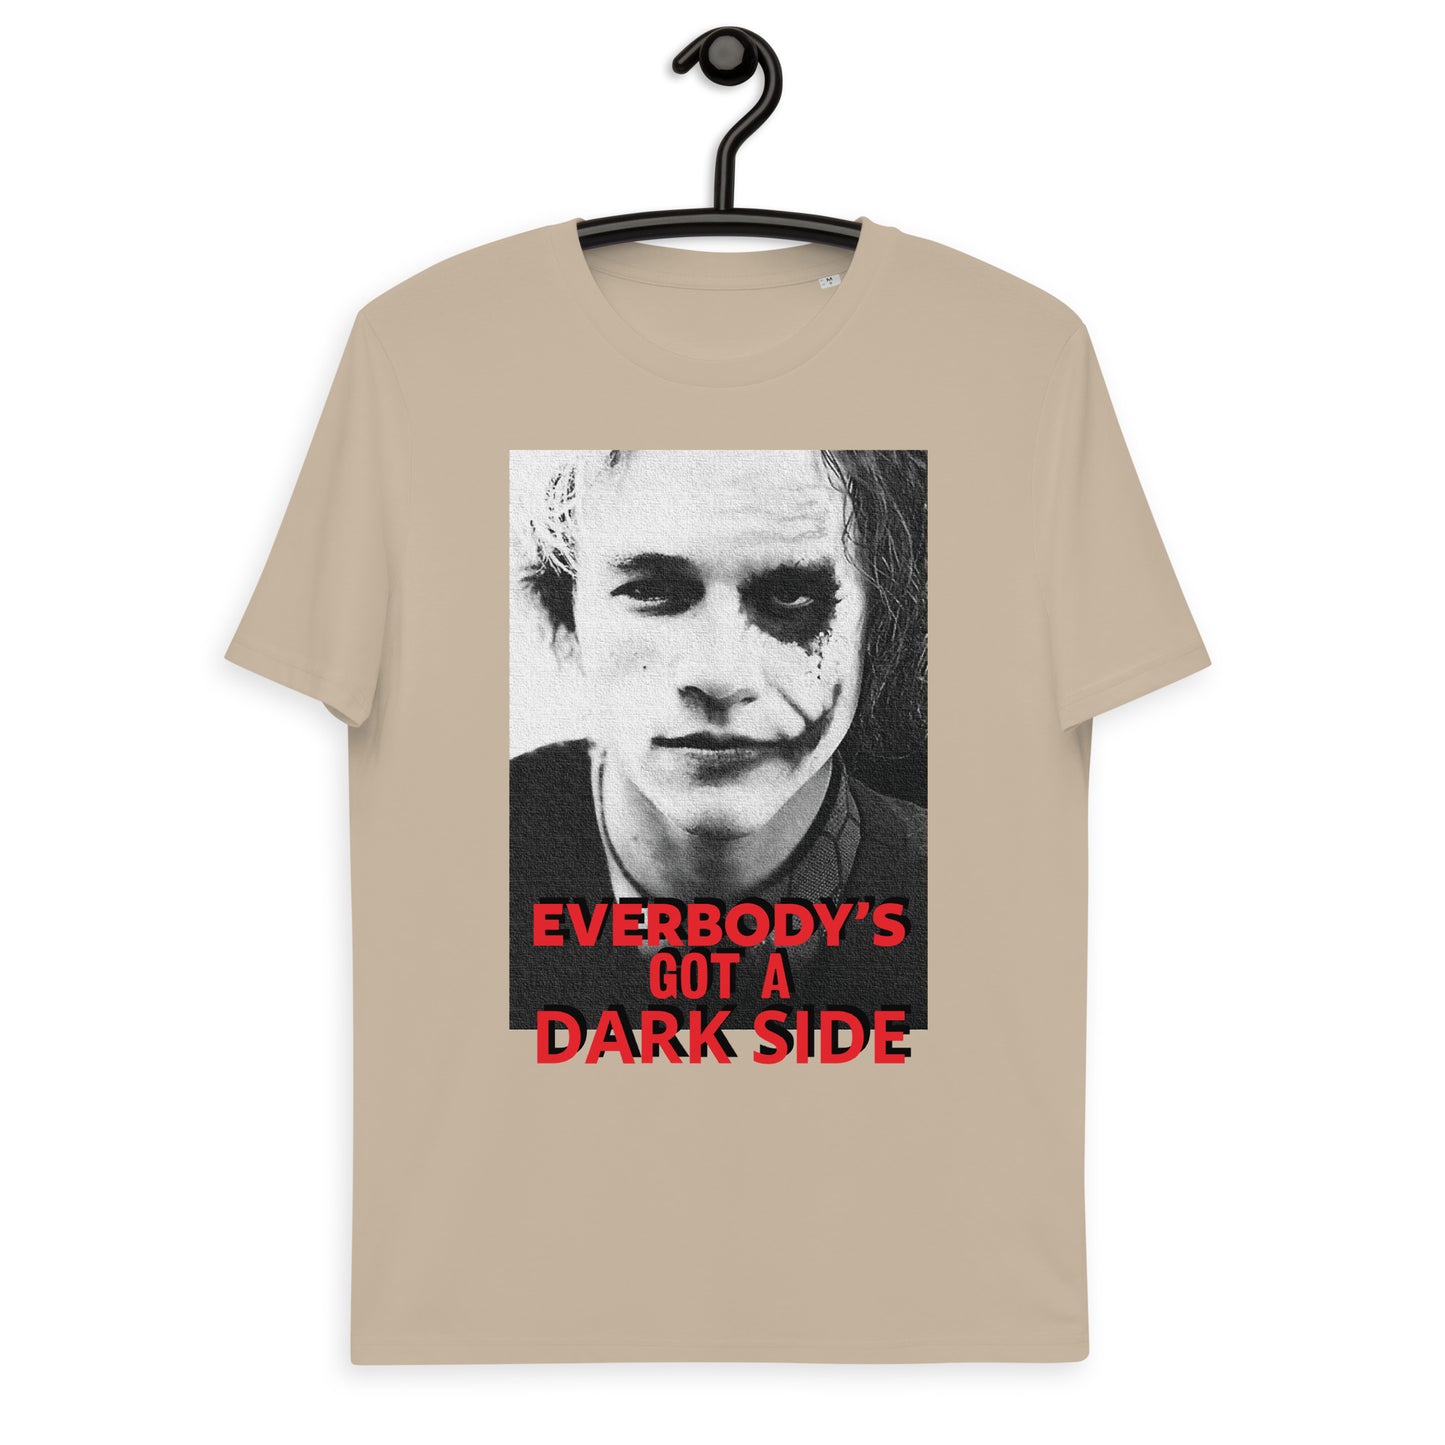 Dark Side Joker KiSS Unisex organic cotton t-shirt - Heath Ledger, Smile, Dark Knight inspired